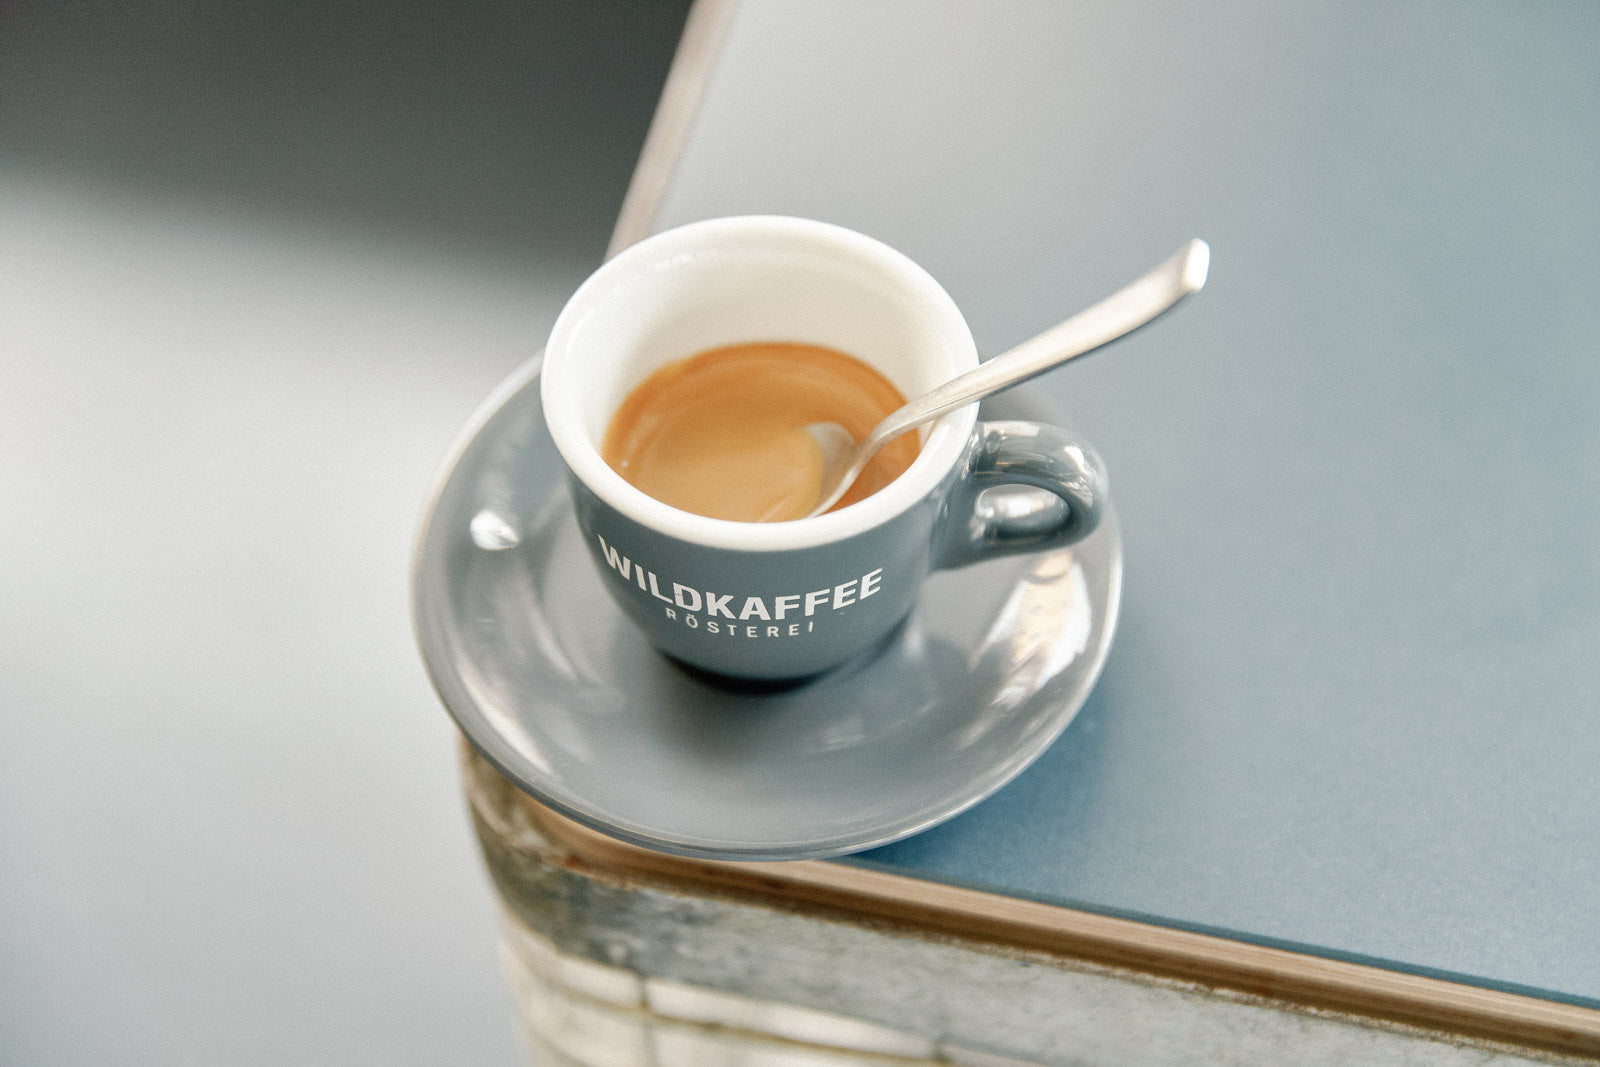 wildkaffee-espresso-kaffeeroesterei